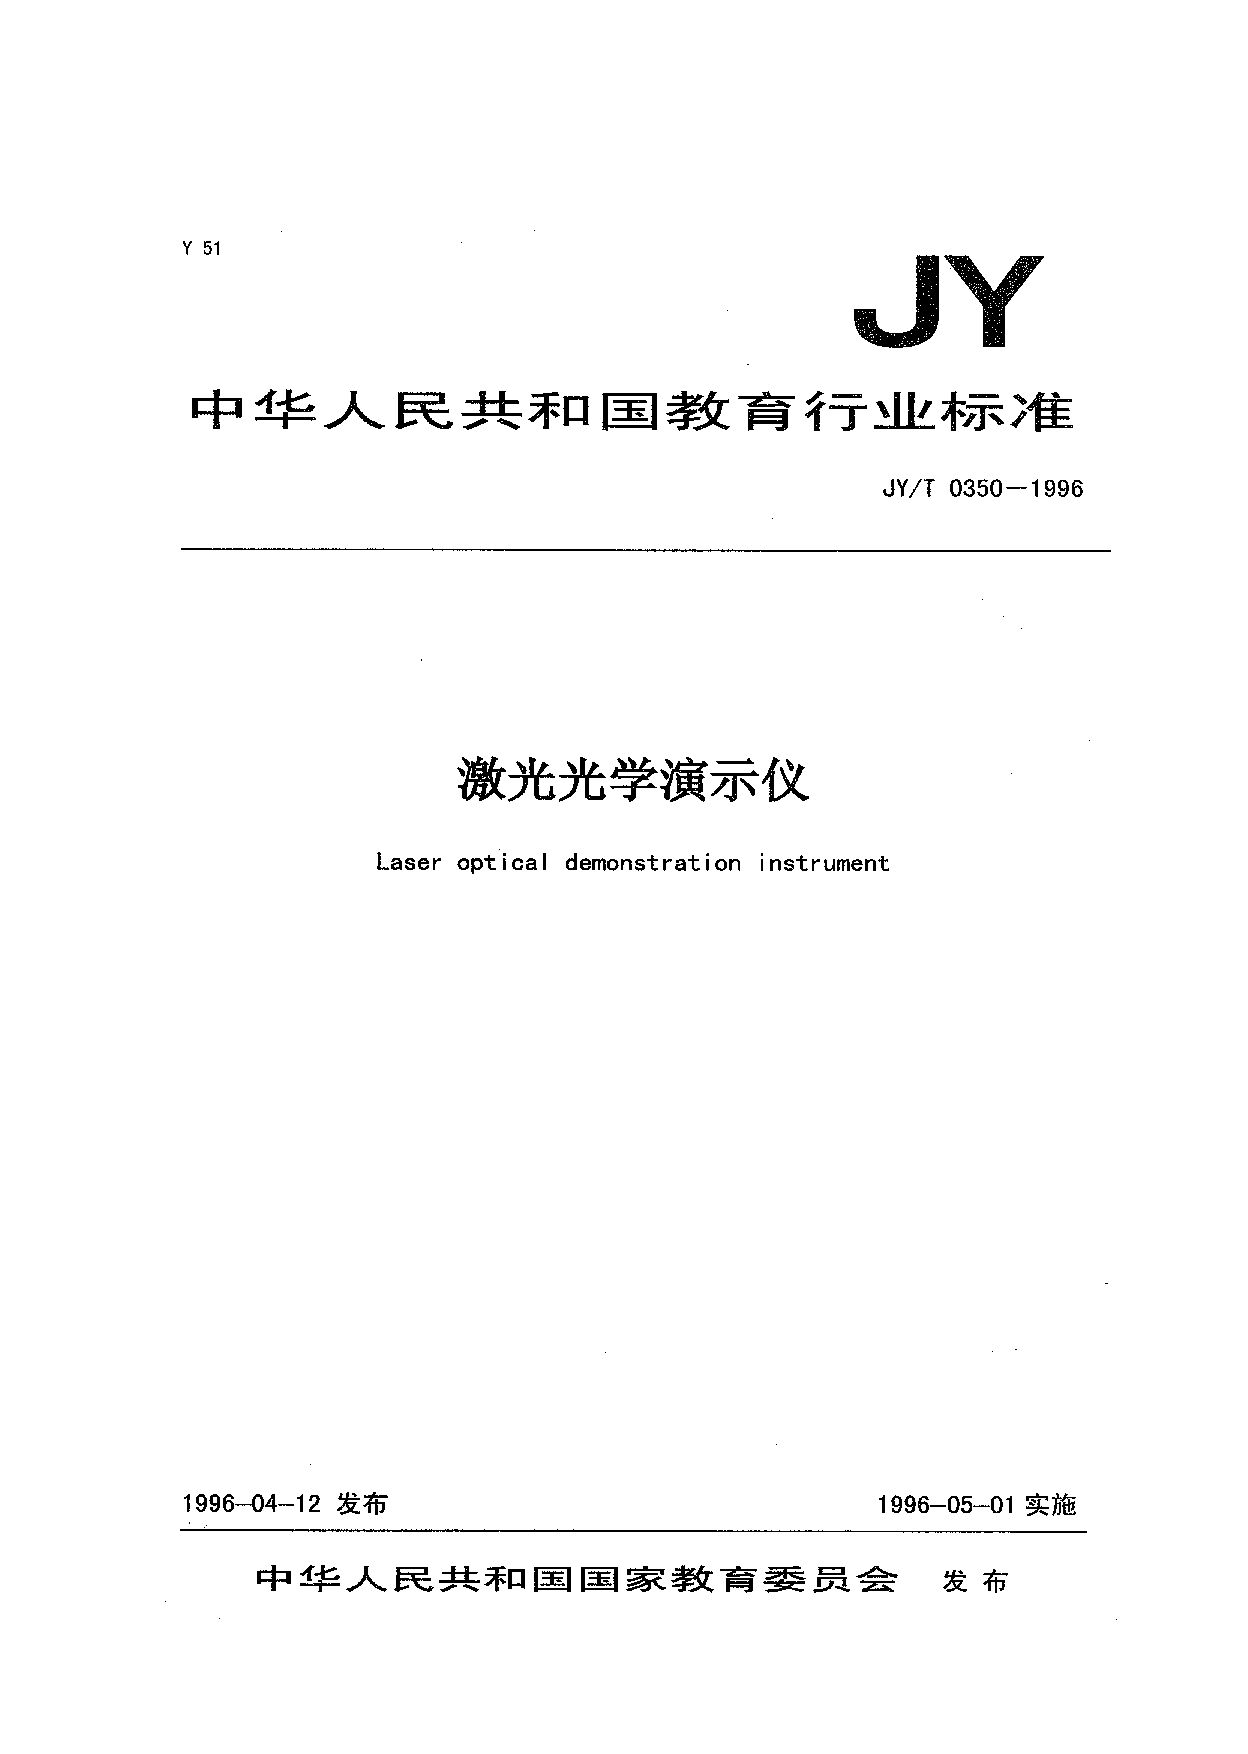 JY/T 0350-1996